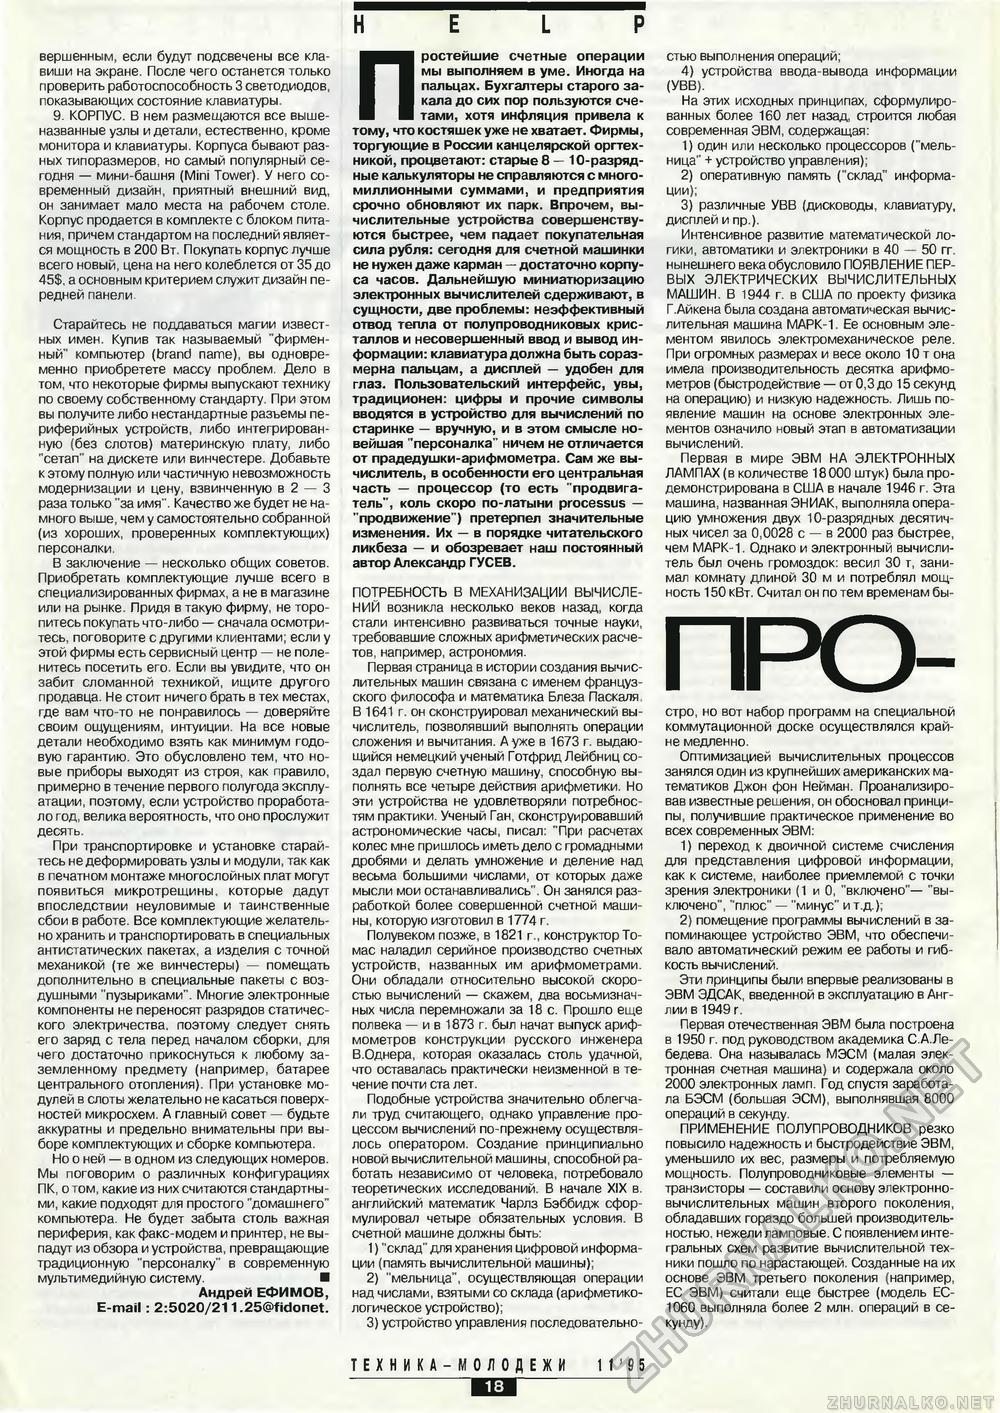 Техника - молодёжи 1995-11, страница 20